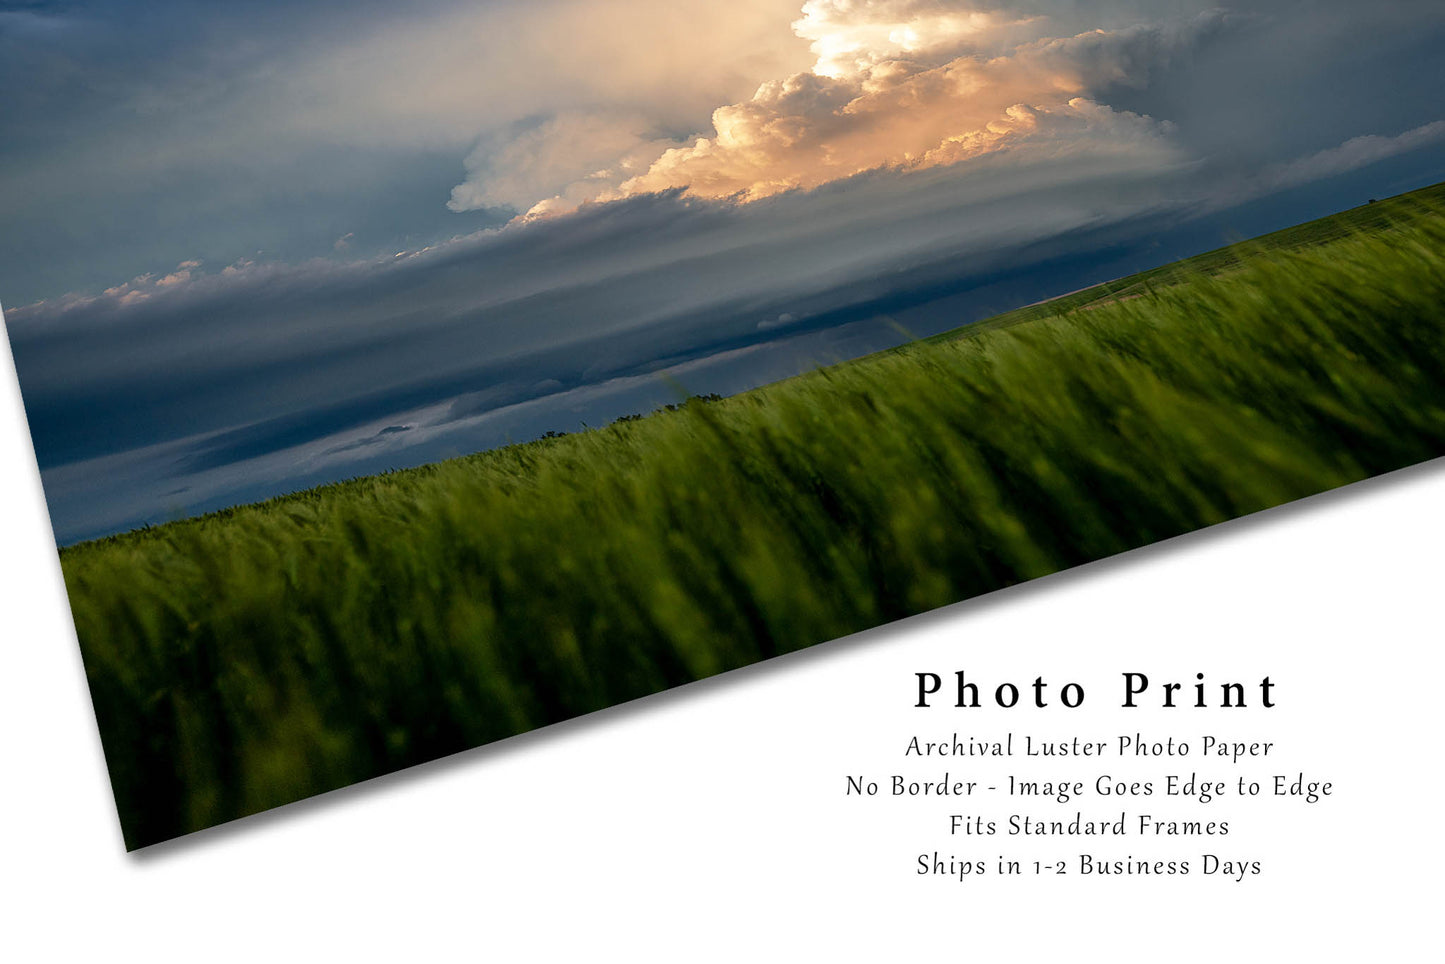 Storm Photo Print | Thunderstorm Picture | Kansas Wall Art | Landscape Photography | Nature Decor